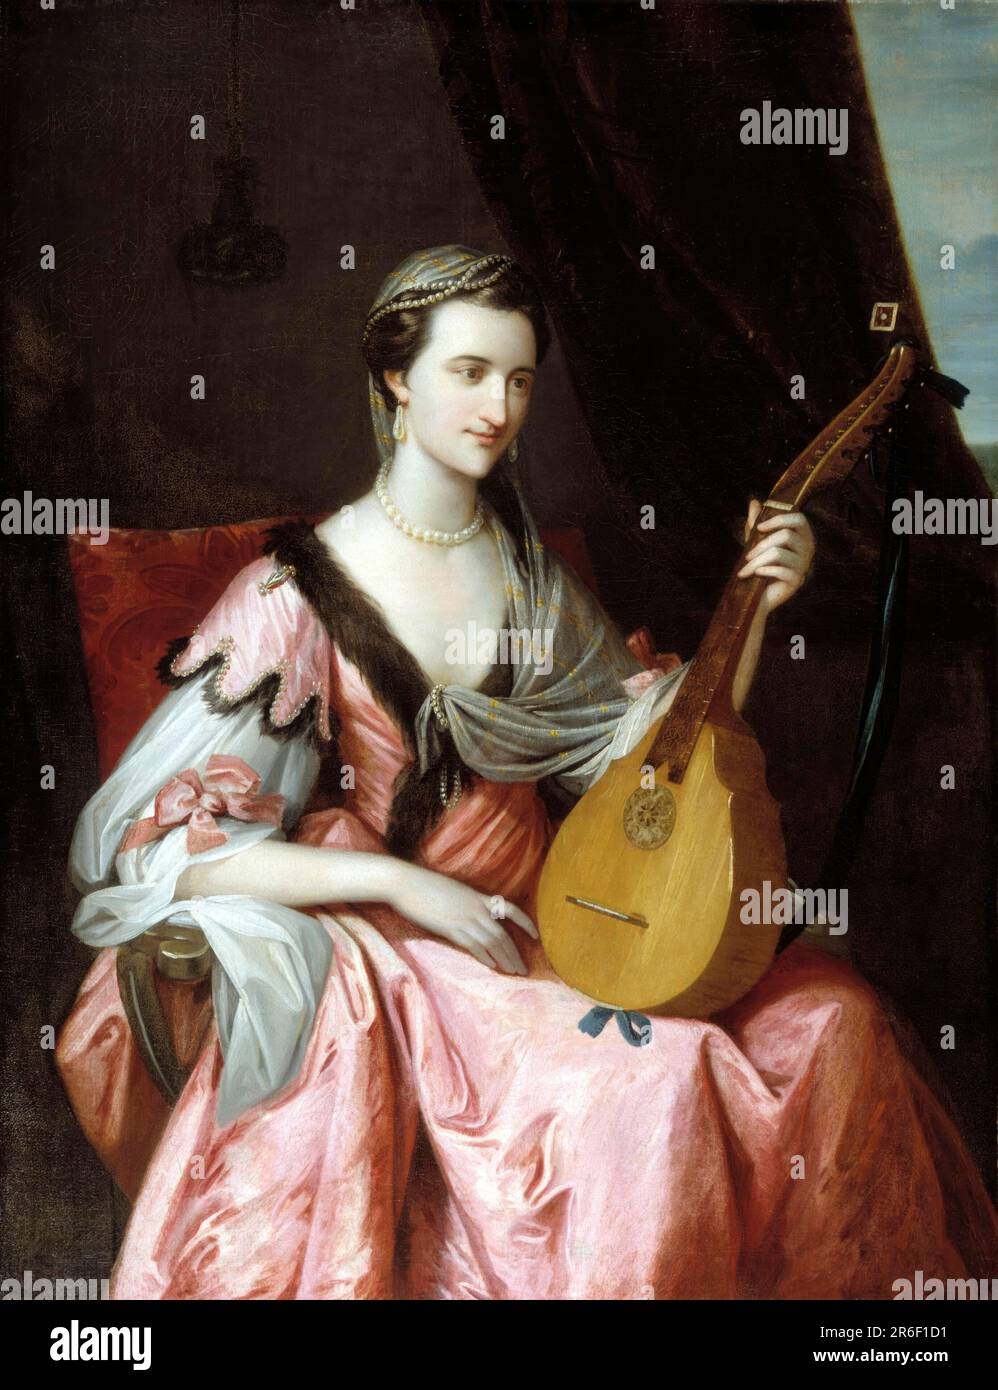 Mary Hopkinson. huile sur toile. Date : env. 1764. Musée: Smithsonian American Art Museum. Banque D'Images